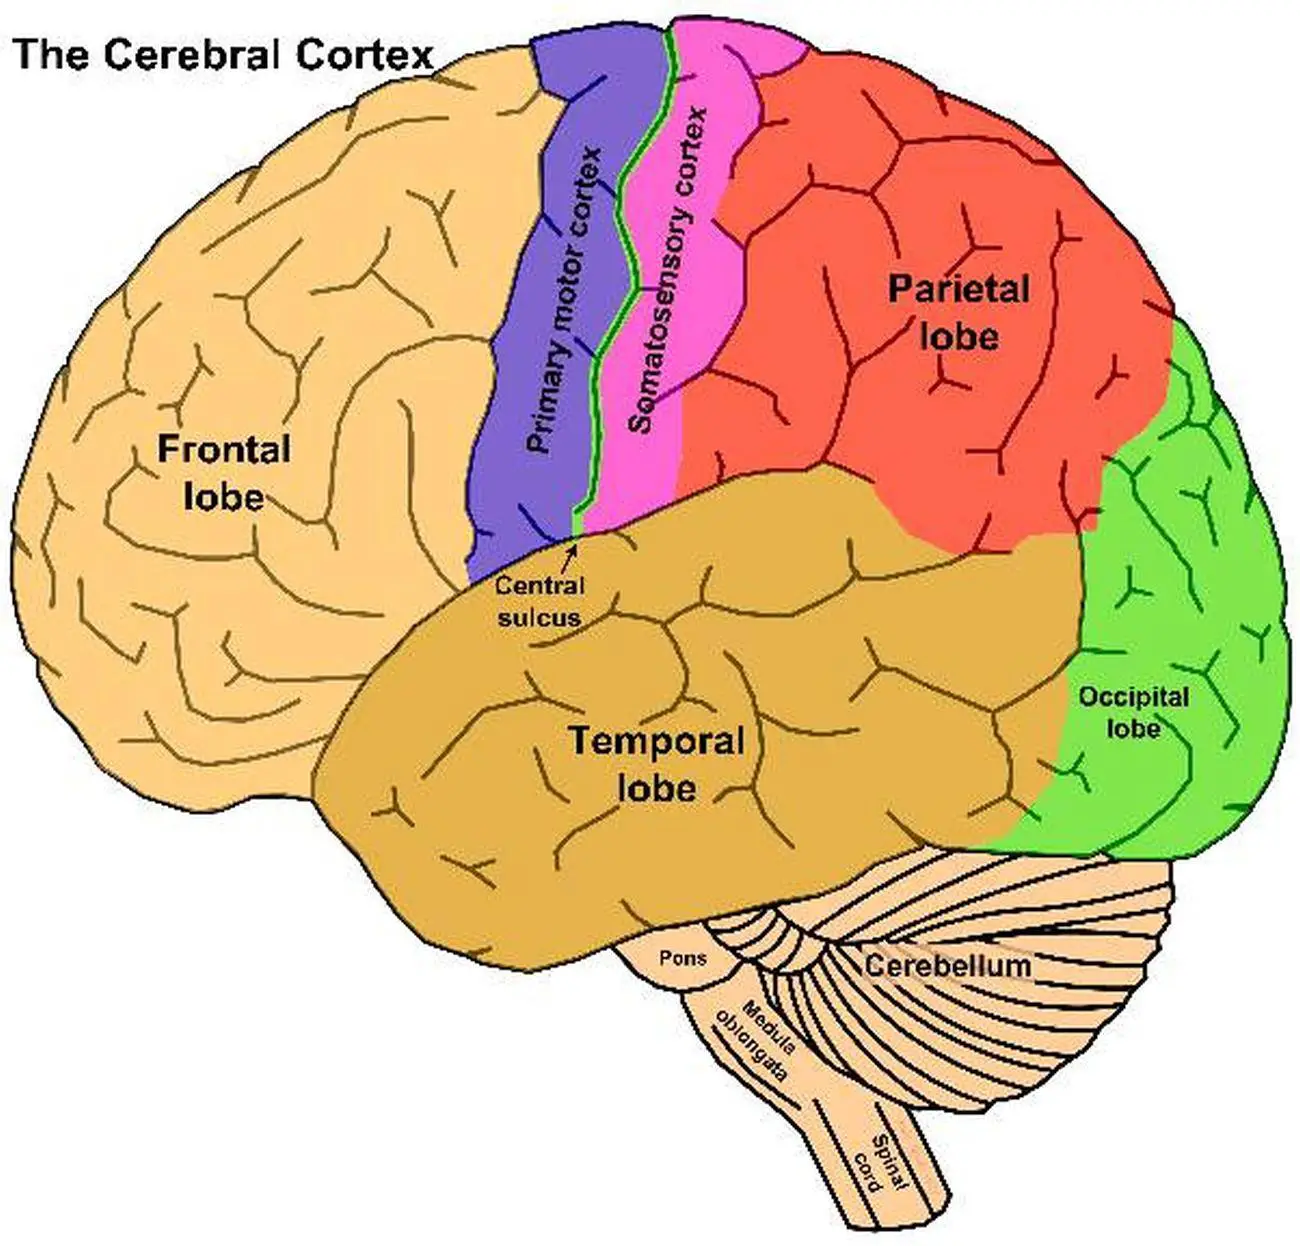 Pictures Of Cerebral Cortex